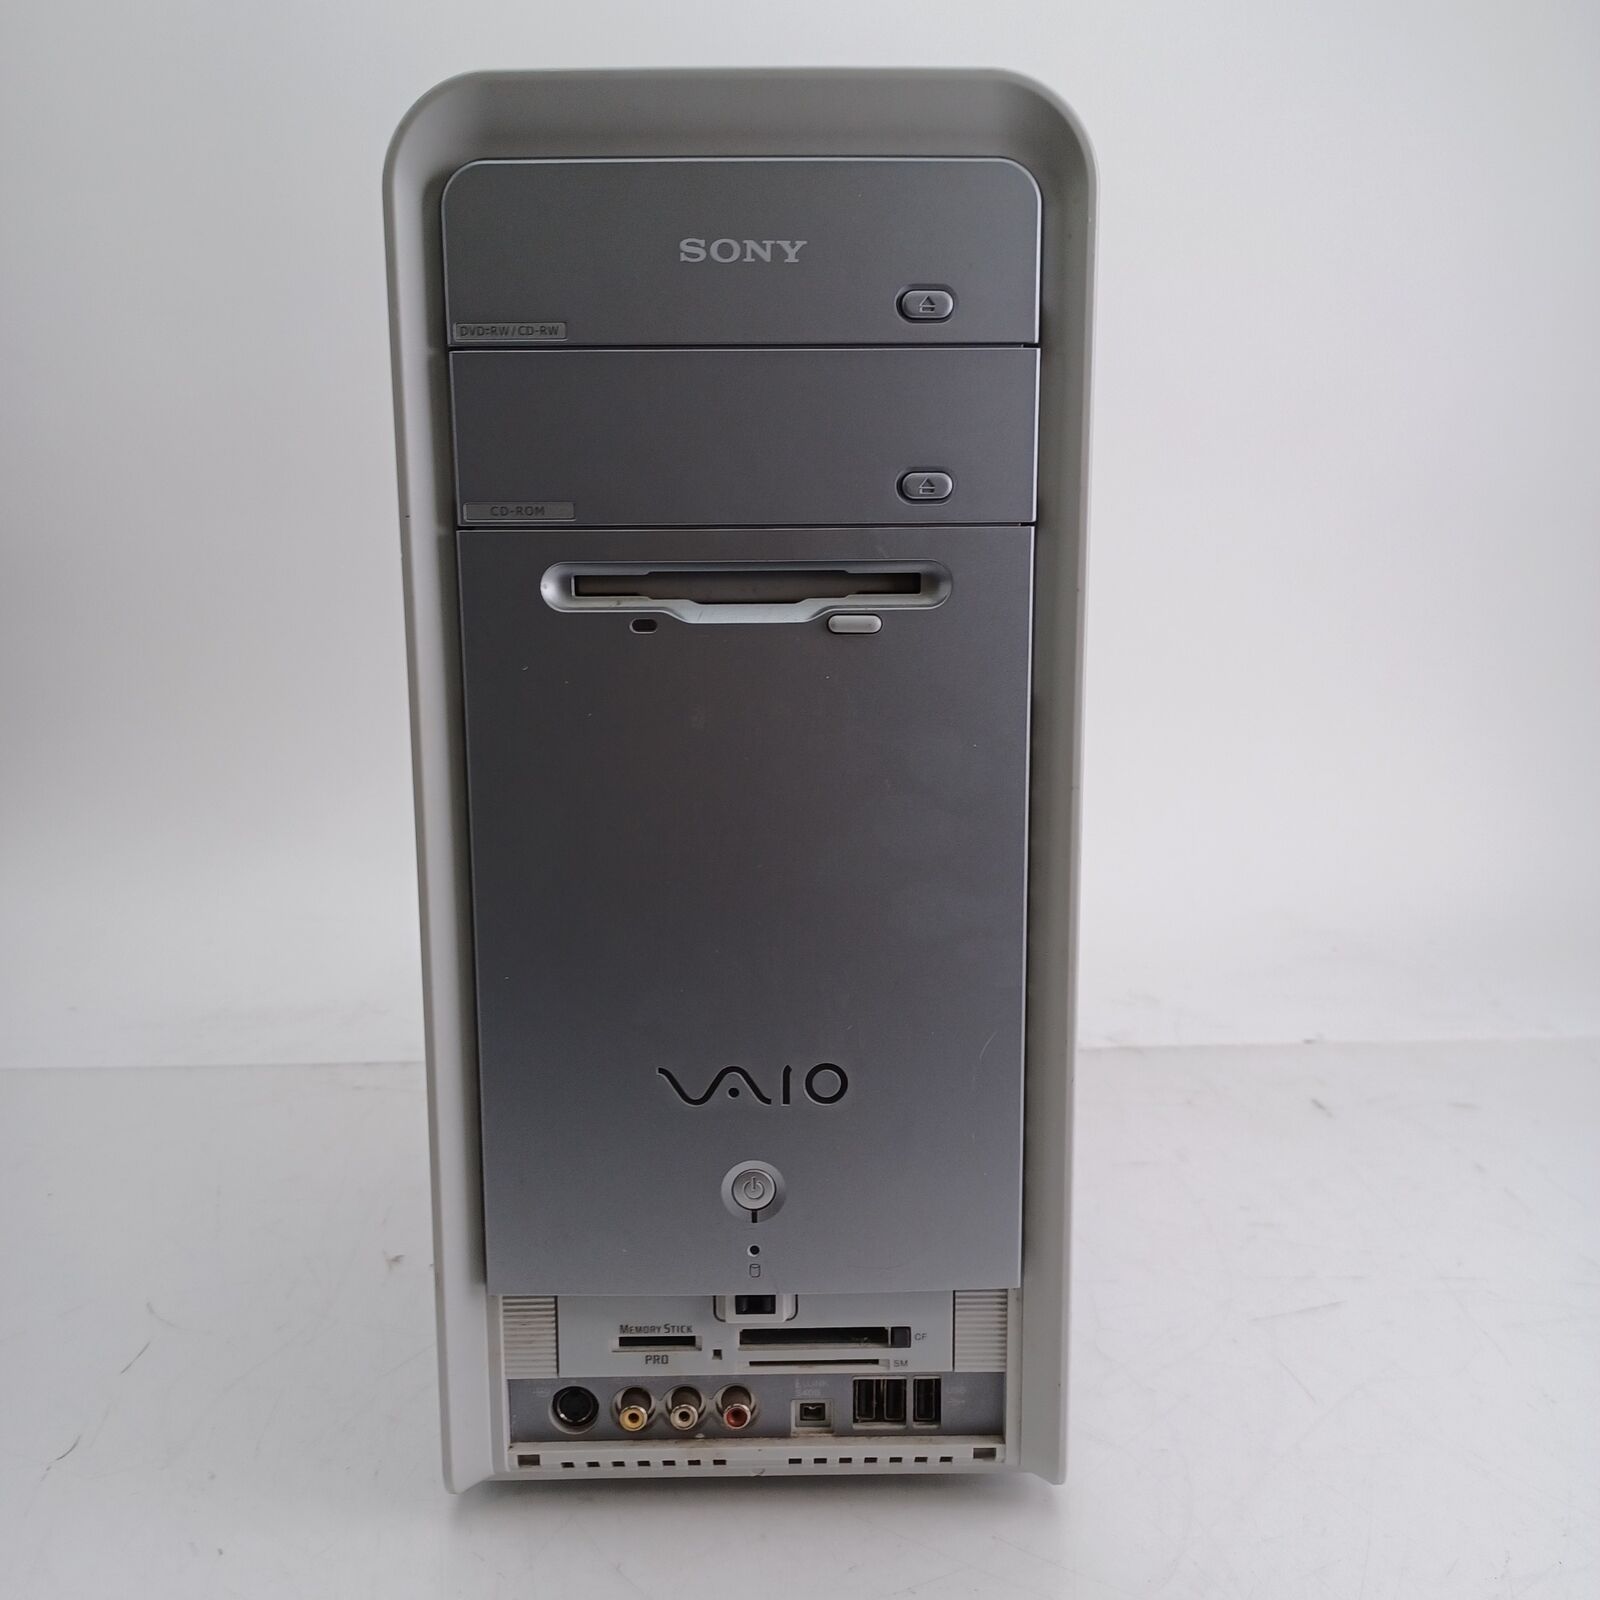 Sony VAIO PCV-2232 Desktop PC Intel Pentium 4 2.80GHz 512MB RAM No HDD